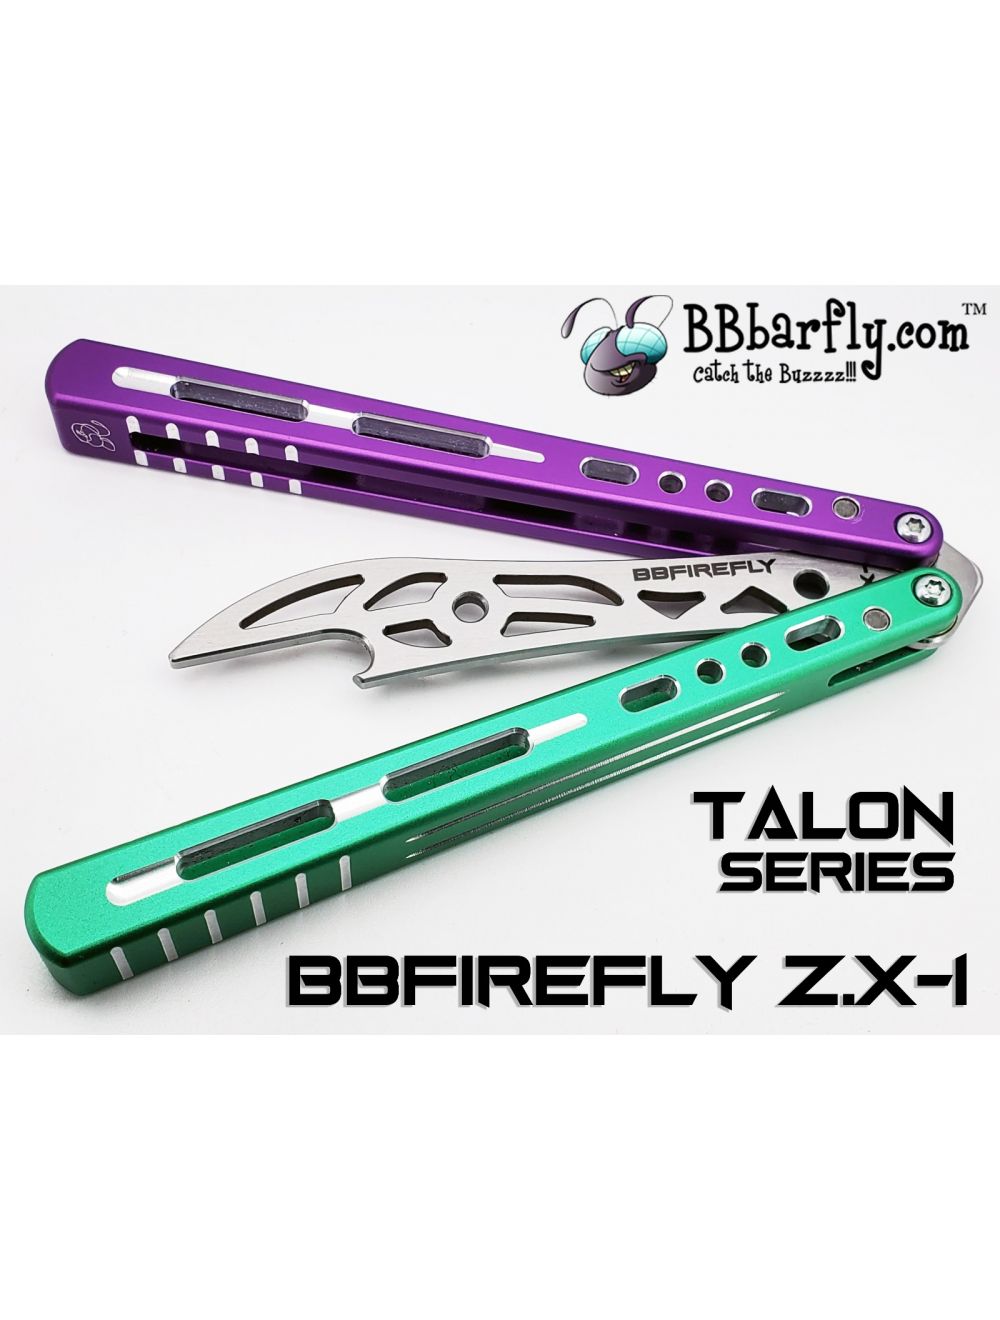 BBbarfly Bottle Openers BBFireFly Z.X-1 Talon Series